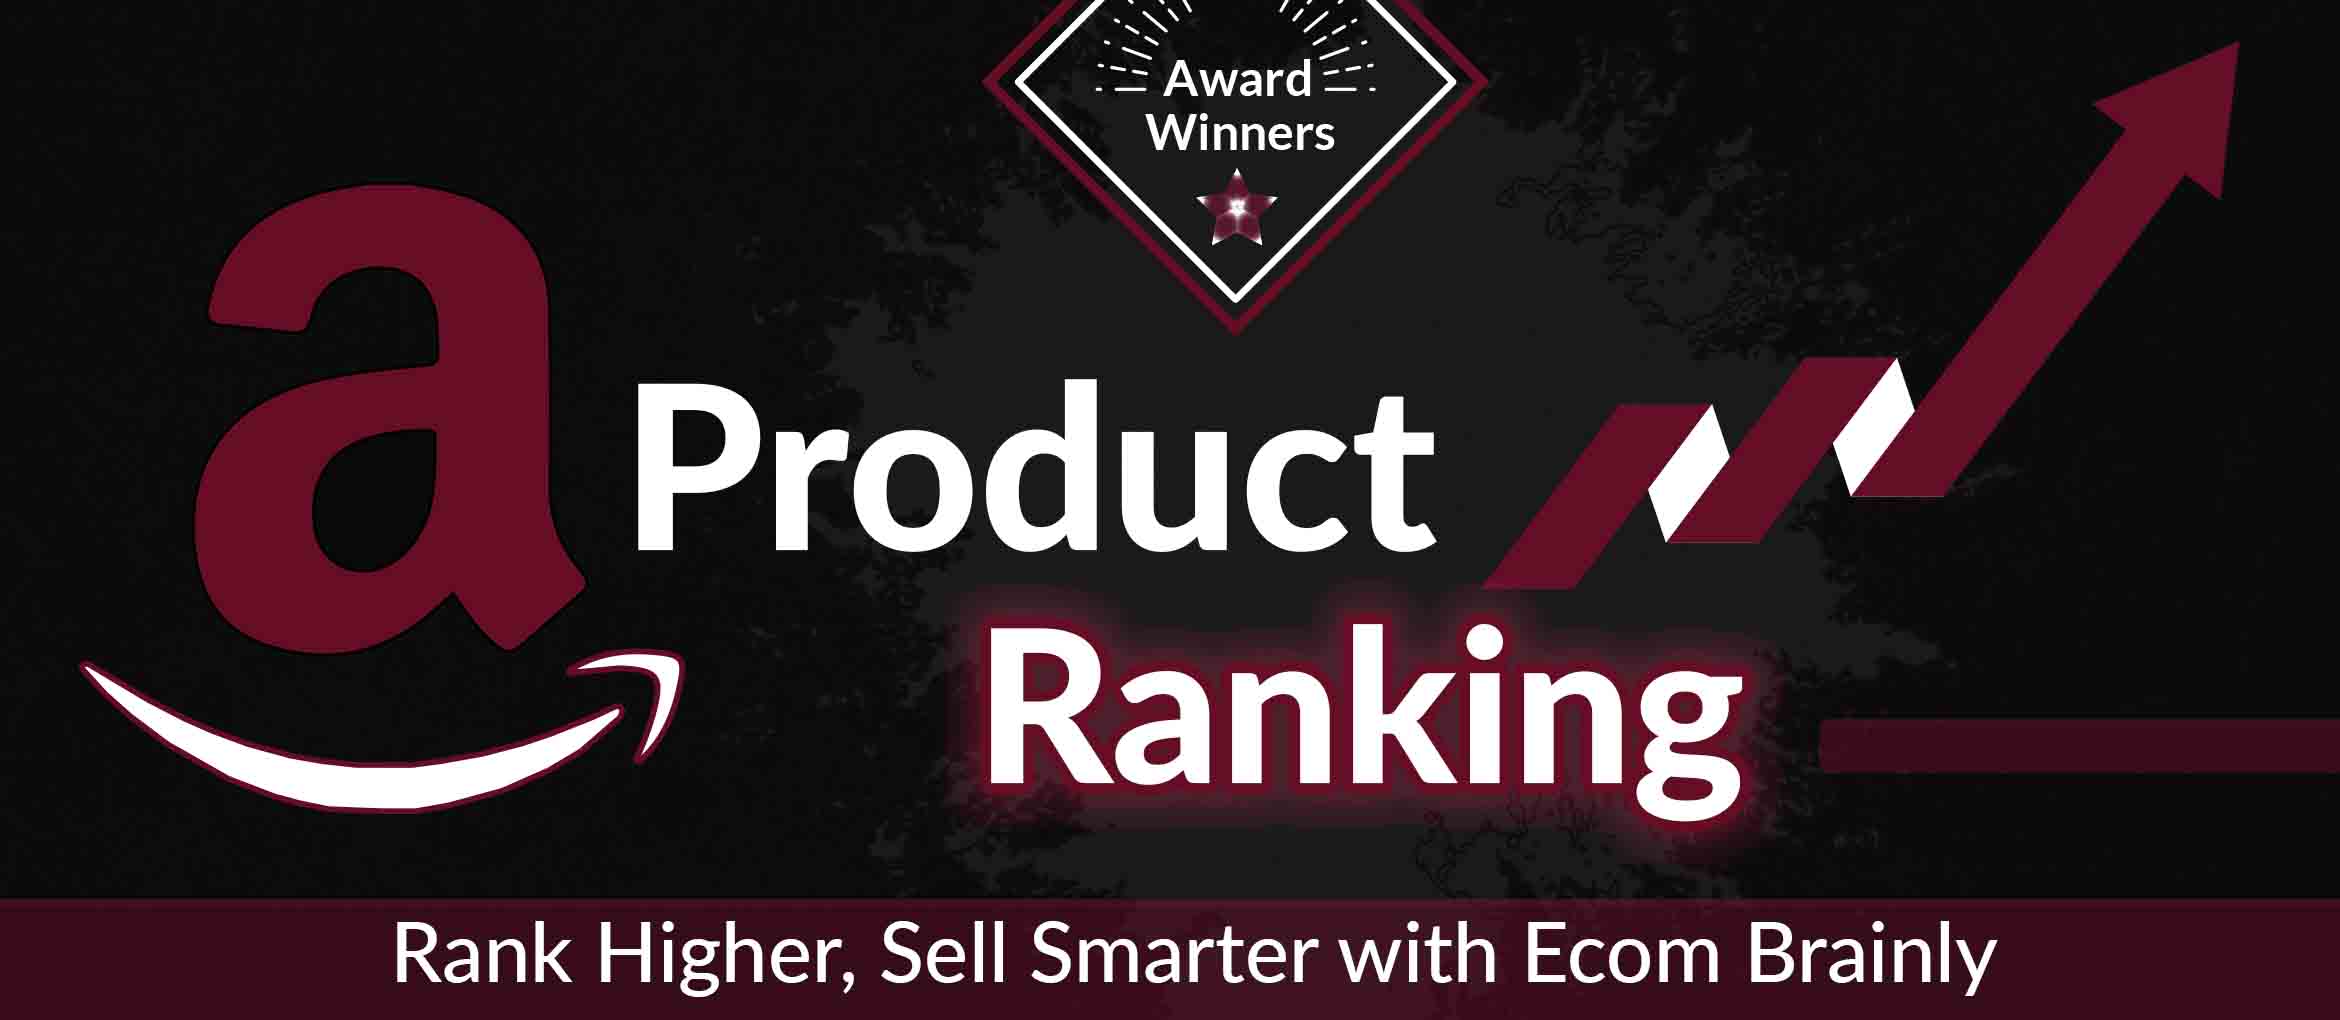 Amazon Product Ranking Services